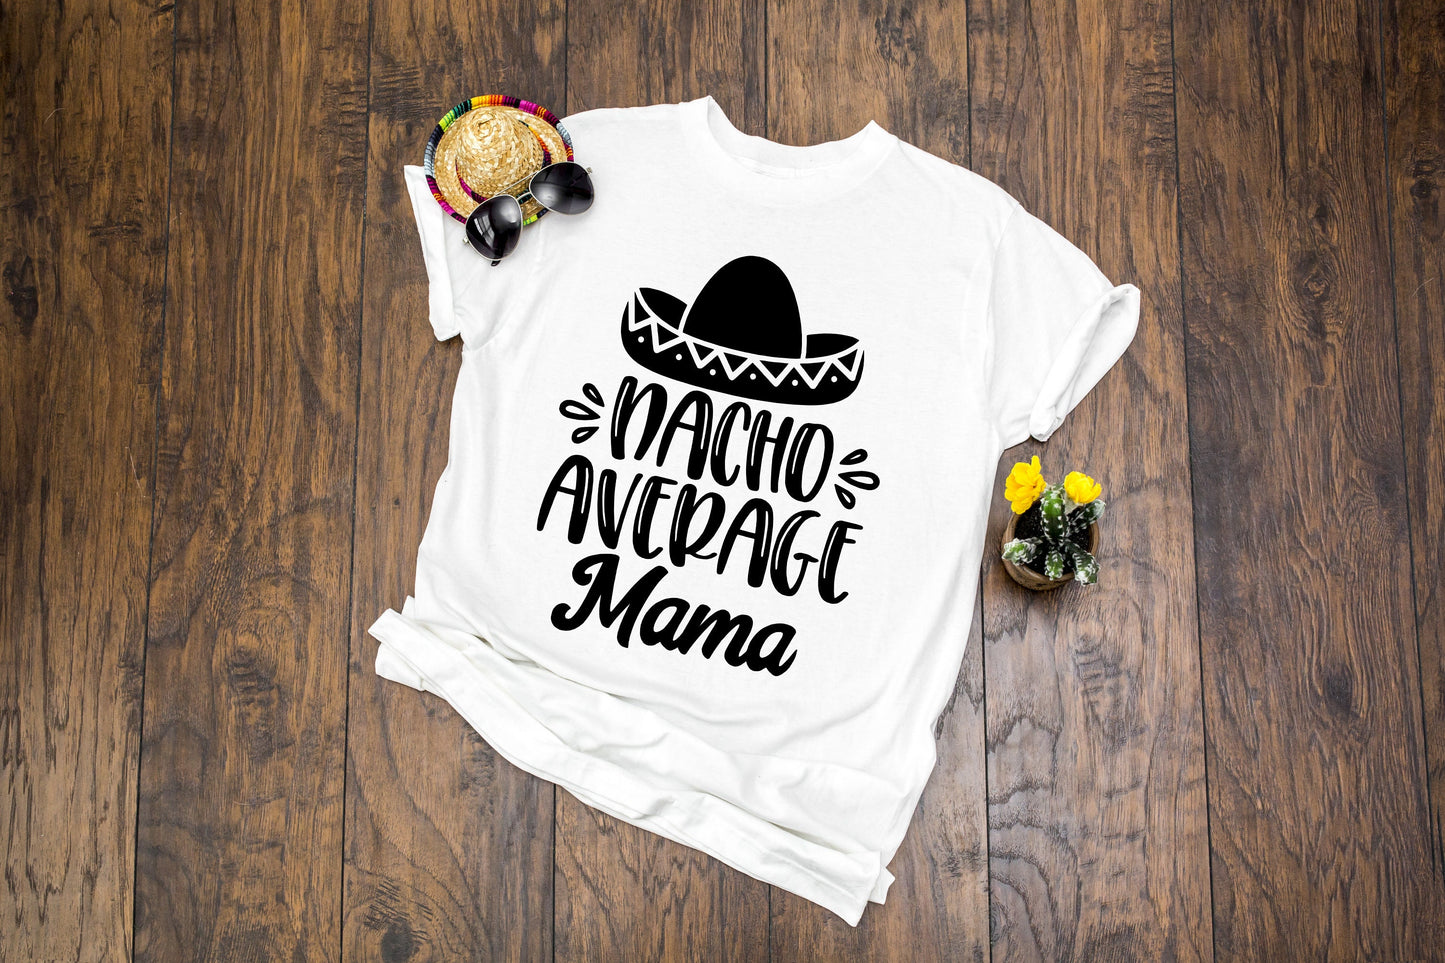 Nacho Average Mama Unisex Adult t-shirt - Cinco de Mayo shirt - Funny Mom Shirt - Mother's Day Shirt - Gift for Mom